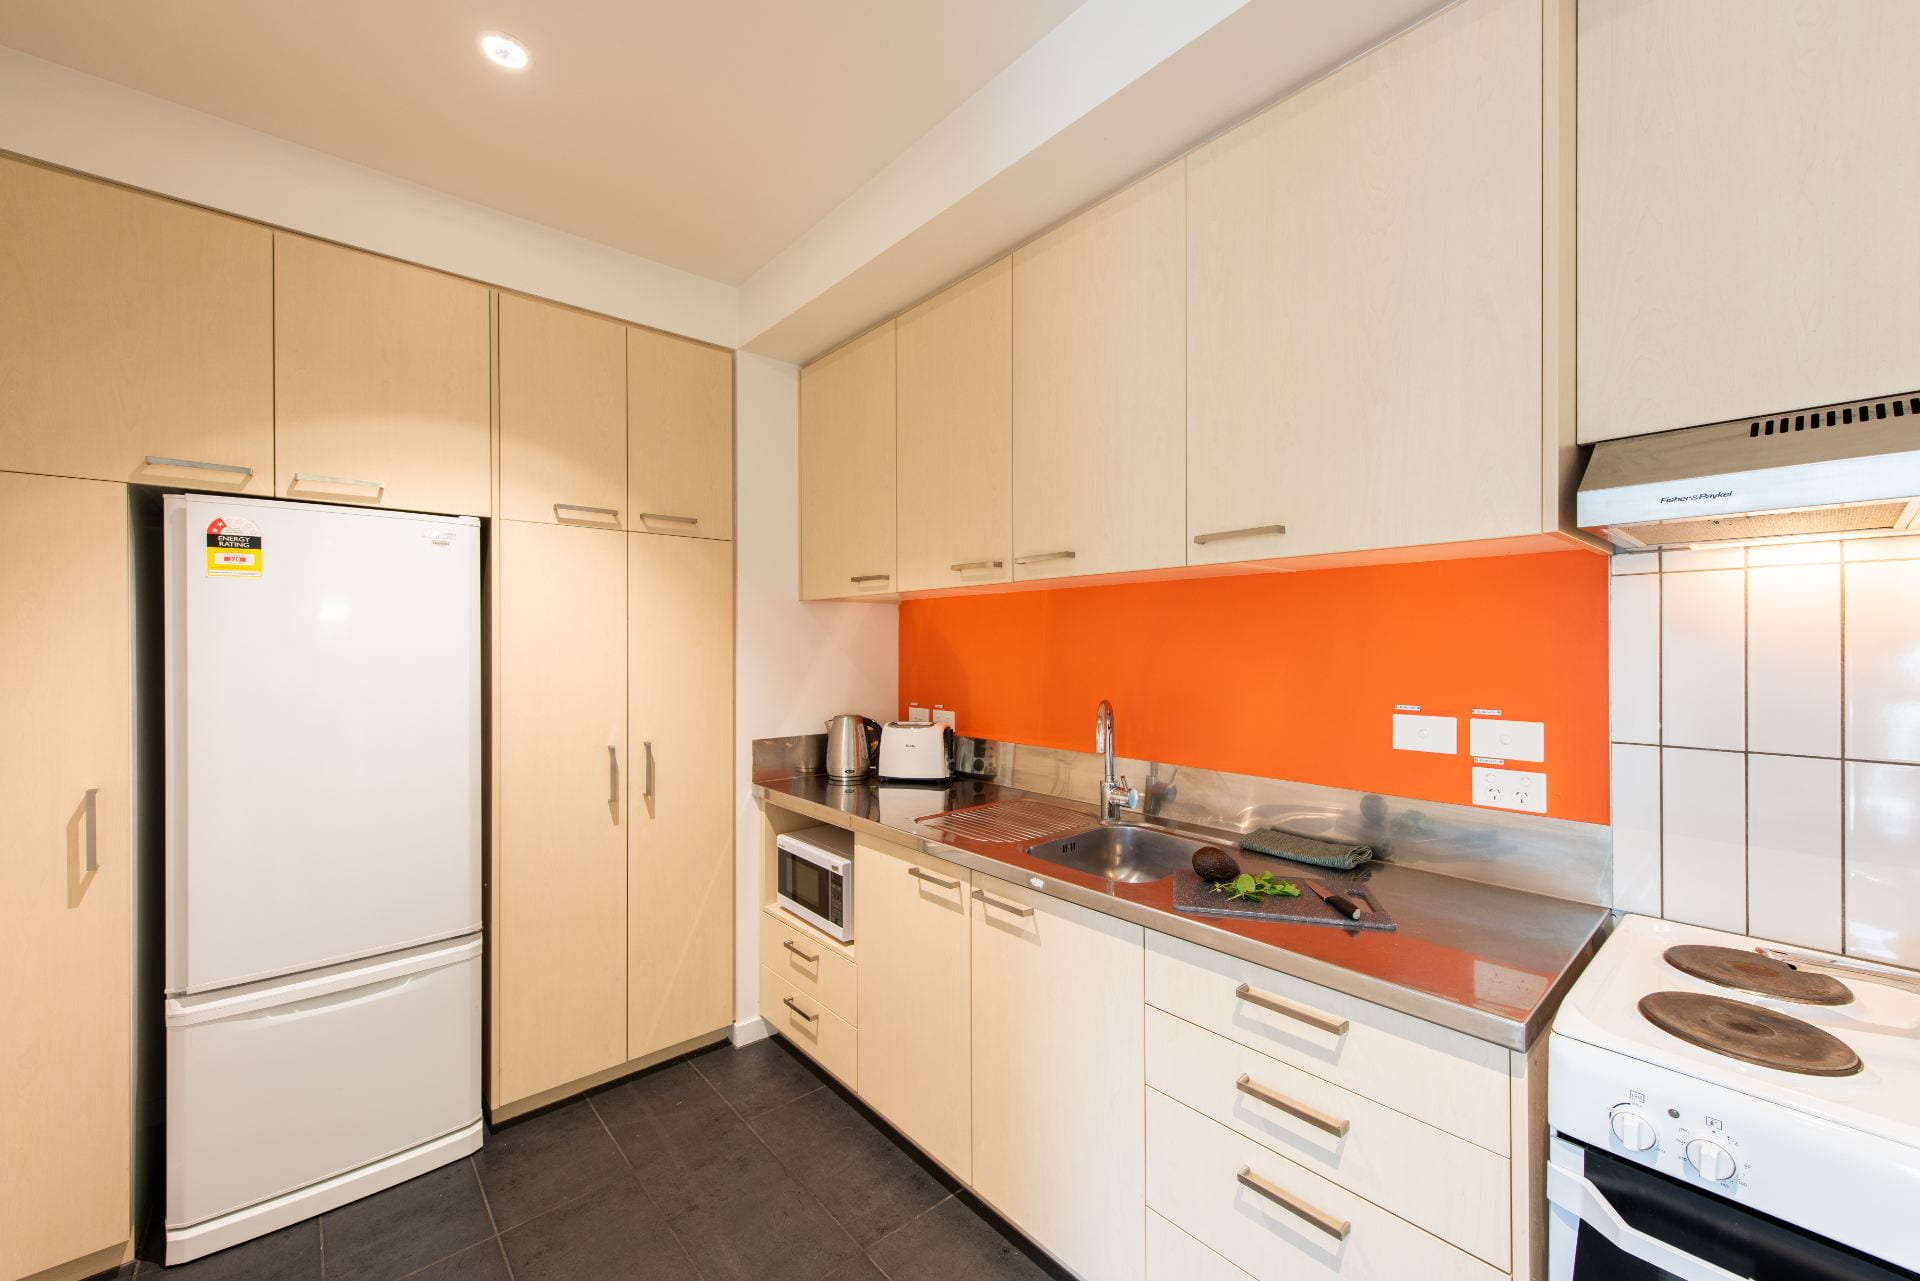 Kitchen in flat at Carlaw Park. Features light wood cabinets, fridge, stove, orange backsplash and white tile backsplash.